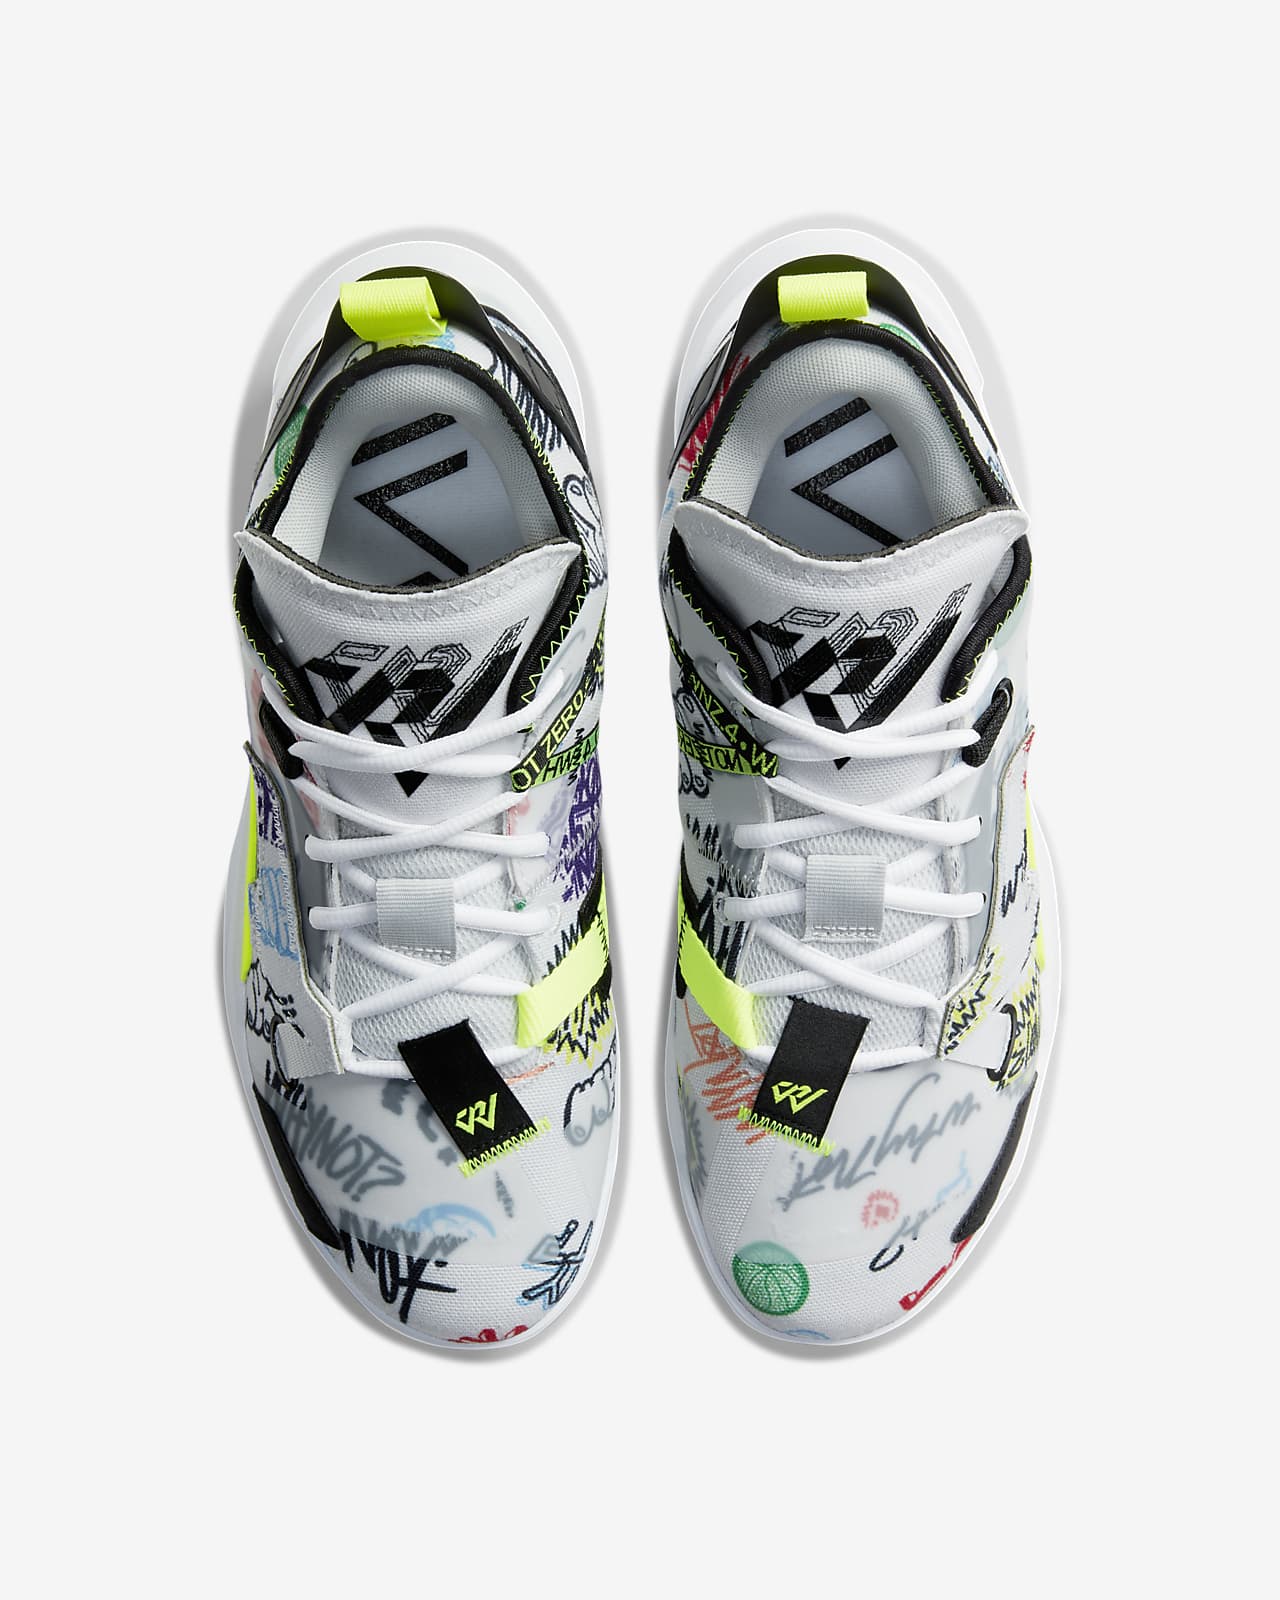 Вай нот 4. Nike Jordan Zero 0.4. Nike Air Jordan why not Zero 0.4. Jordan why not zer0.4. Nike Jordan why not Zero.